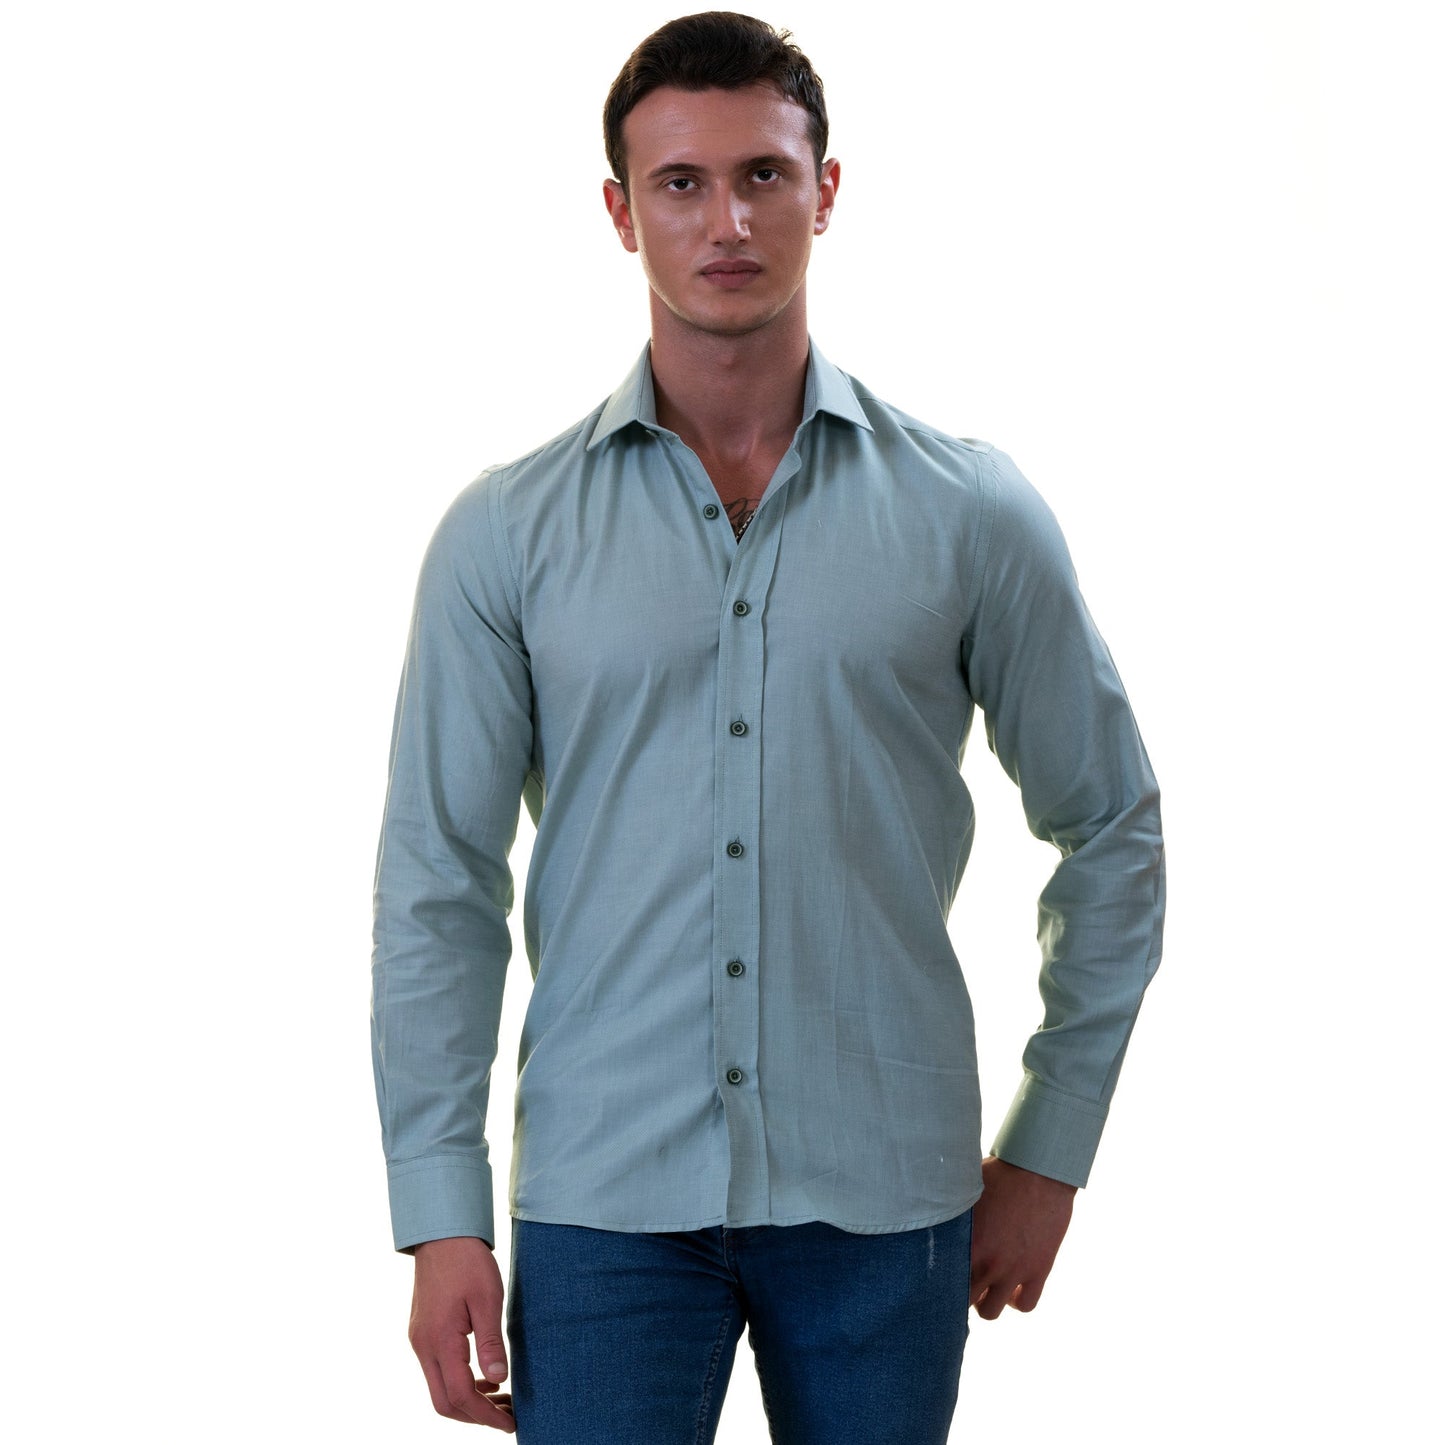 Blue Luxury Men's Tailor Fit Button Up European Made Linen Shirts